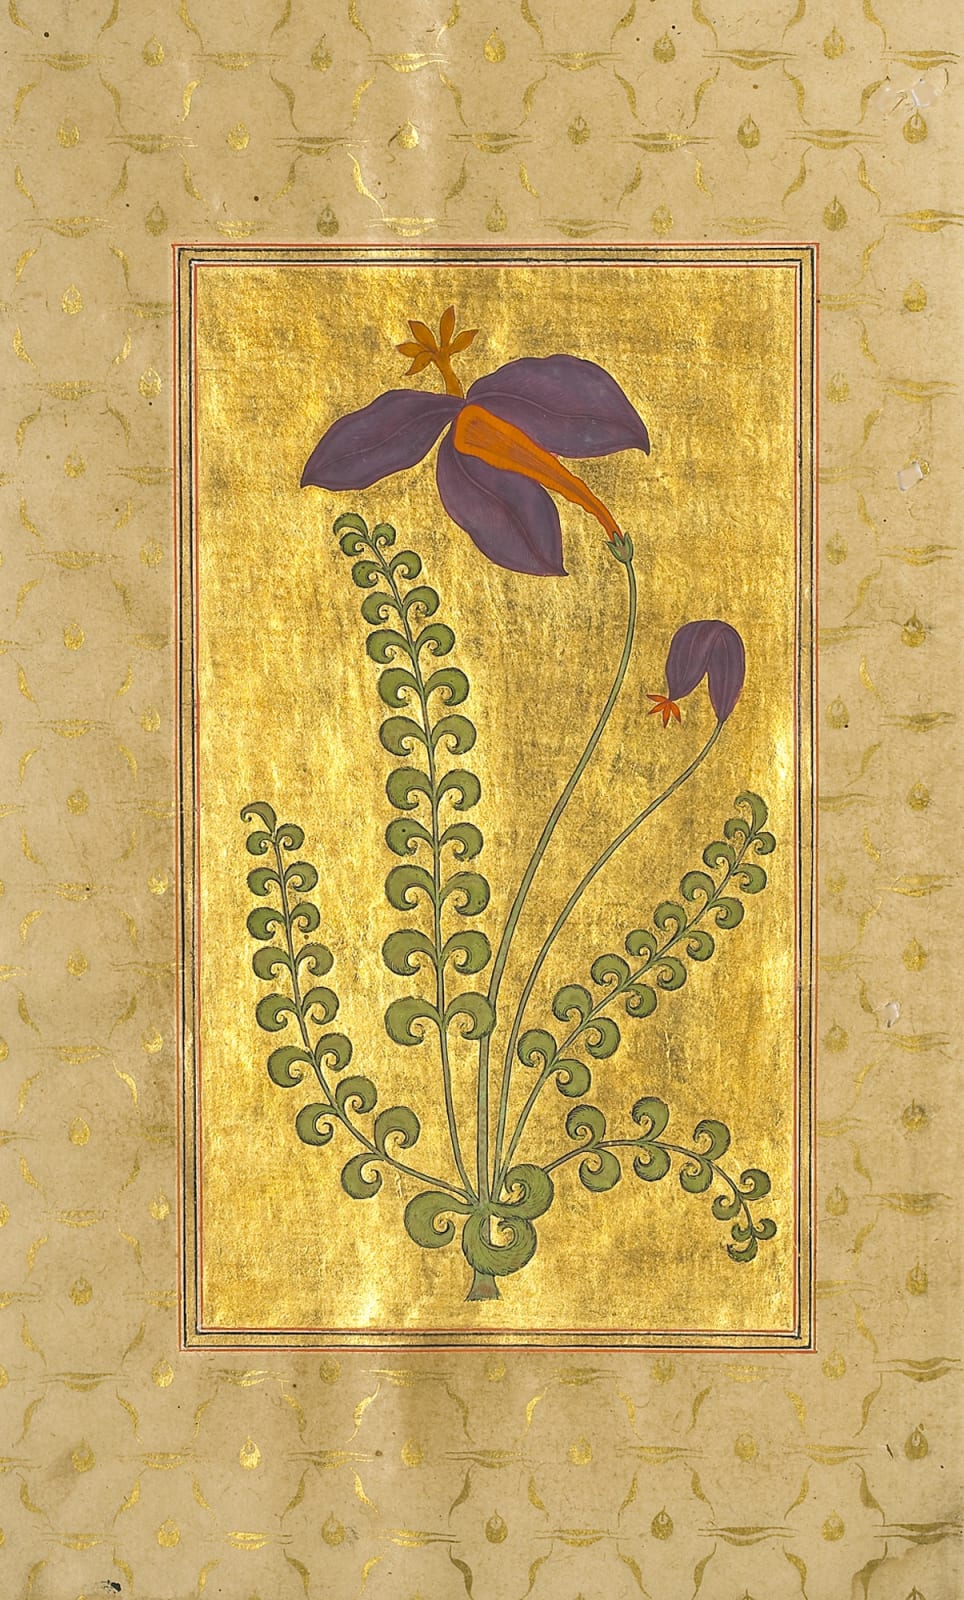 Study of an imaginary Flower, India, Deccan, Aurangabad, dated VS 1726/ 1669 AD